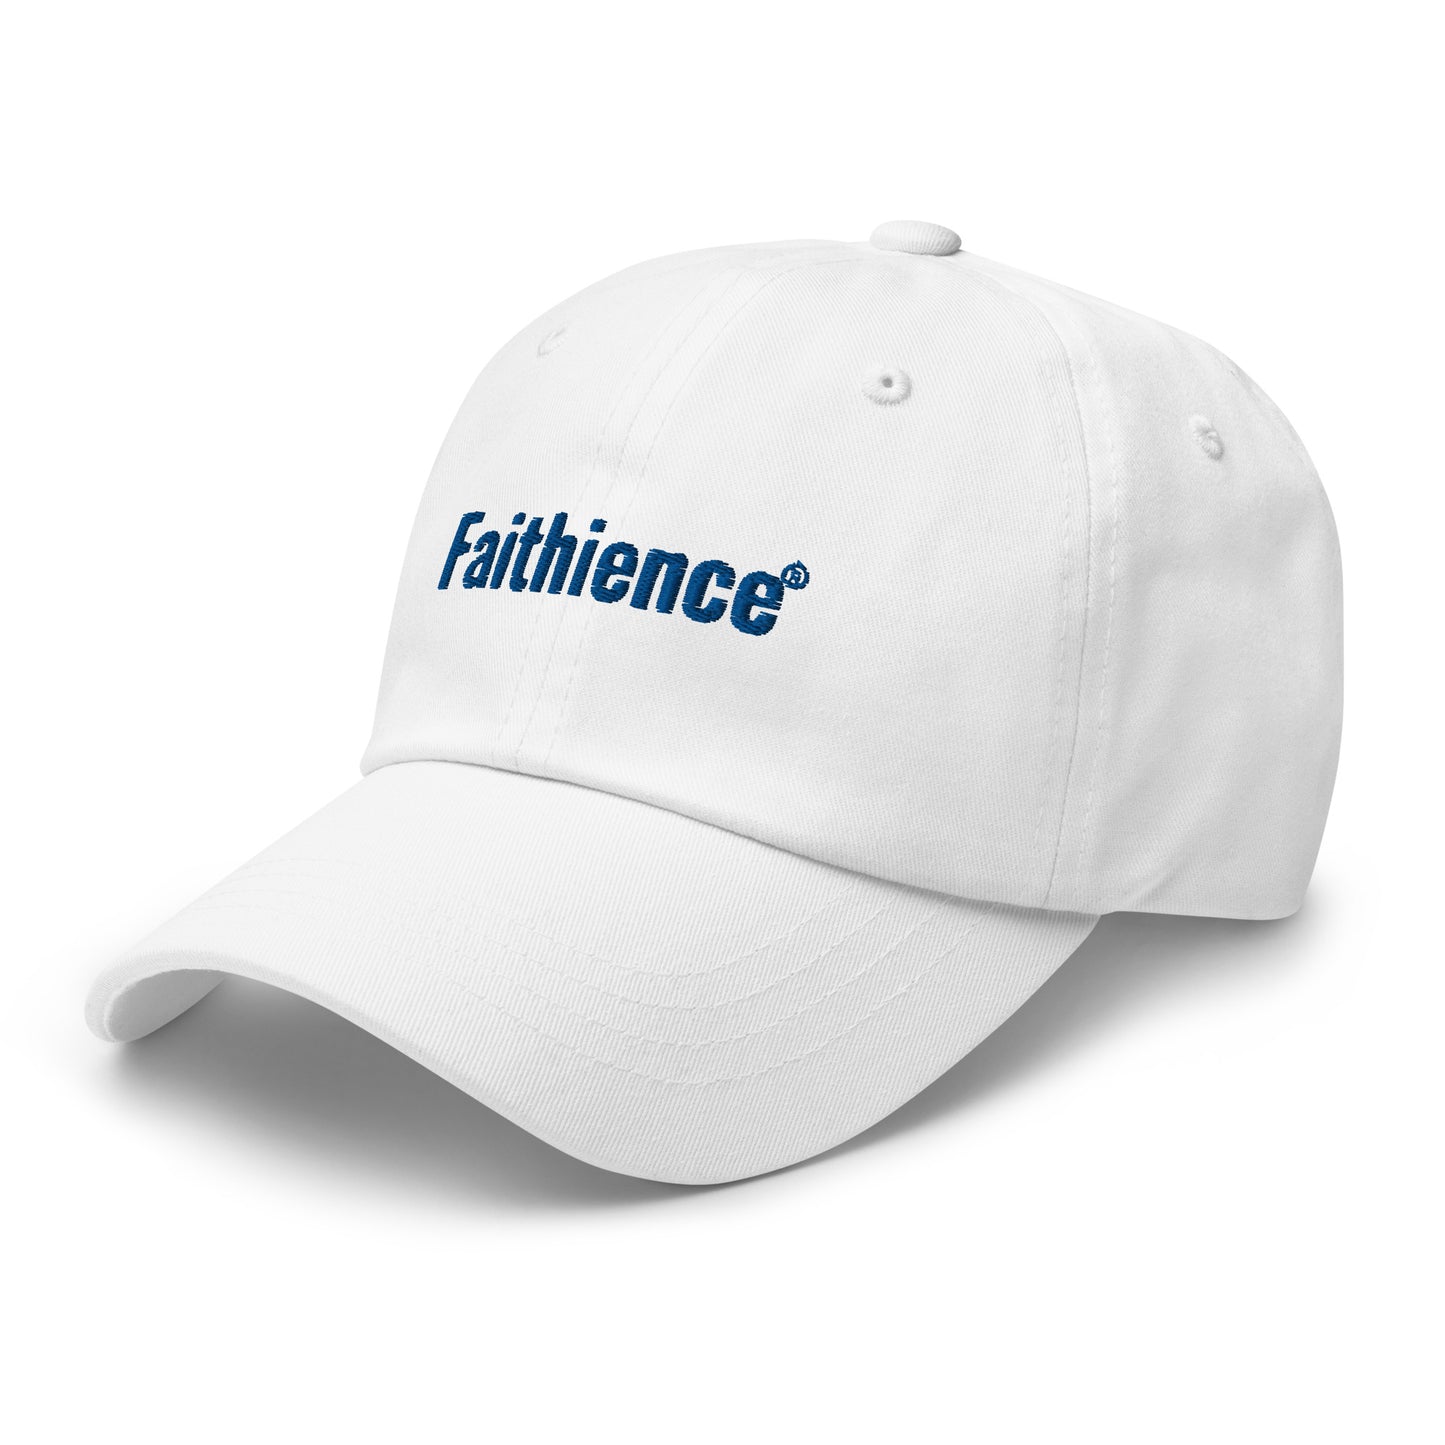 Faithience Dad Hat